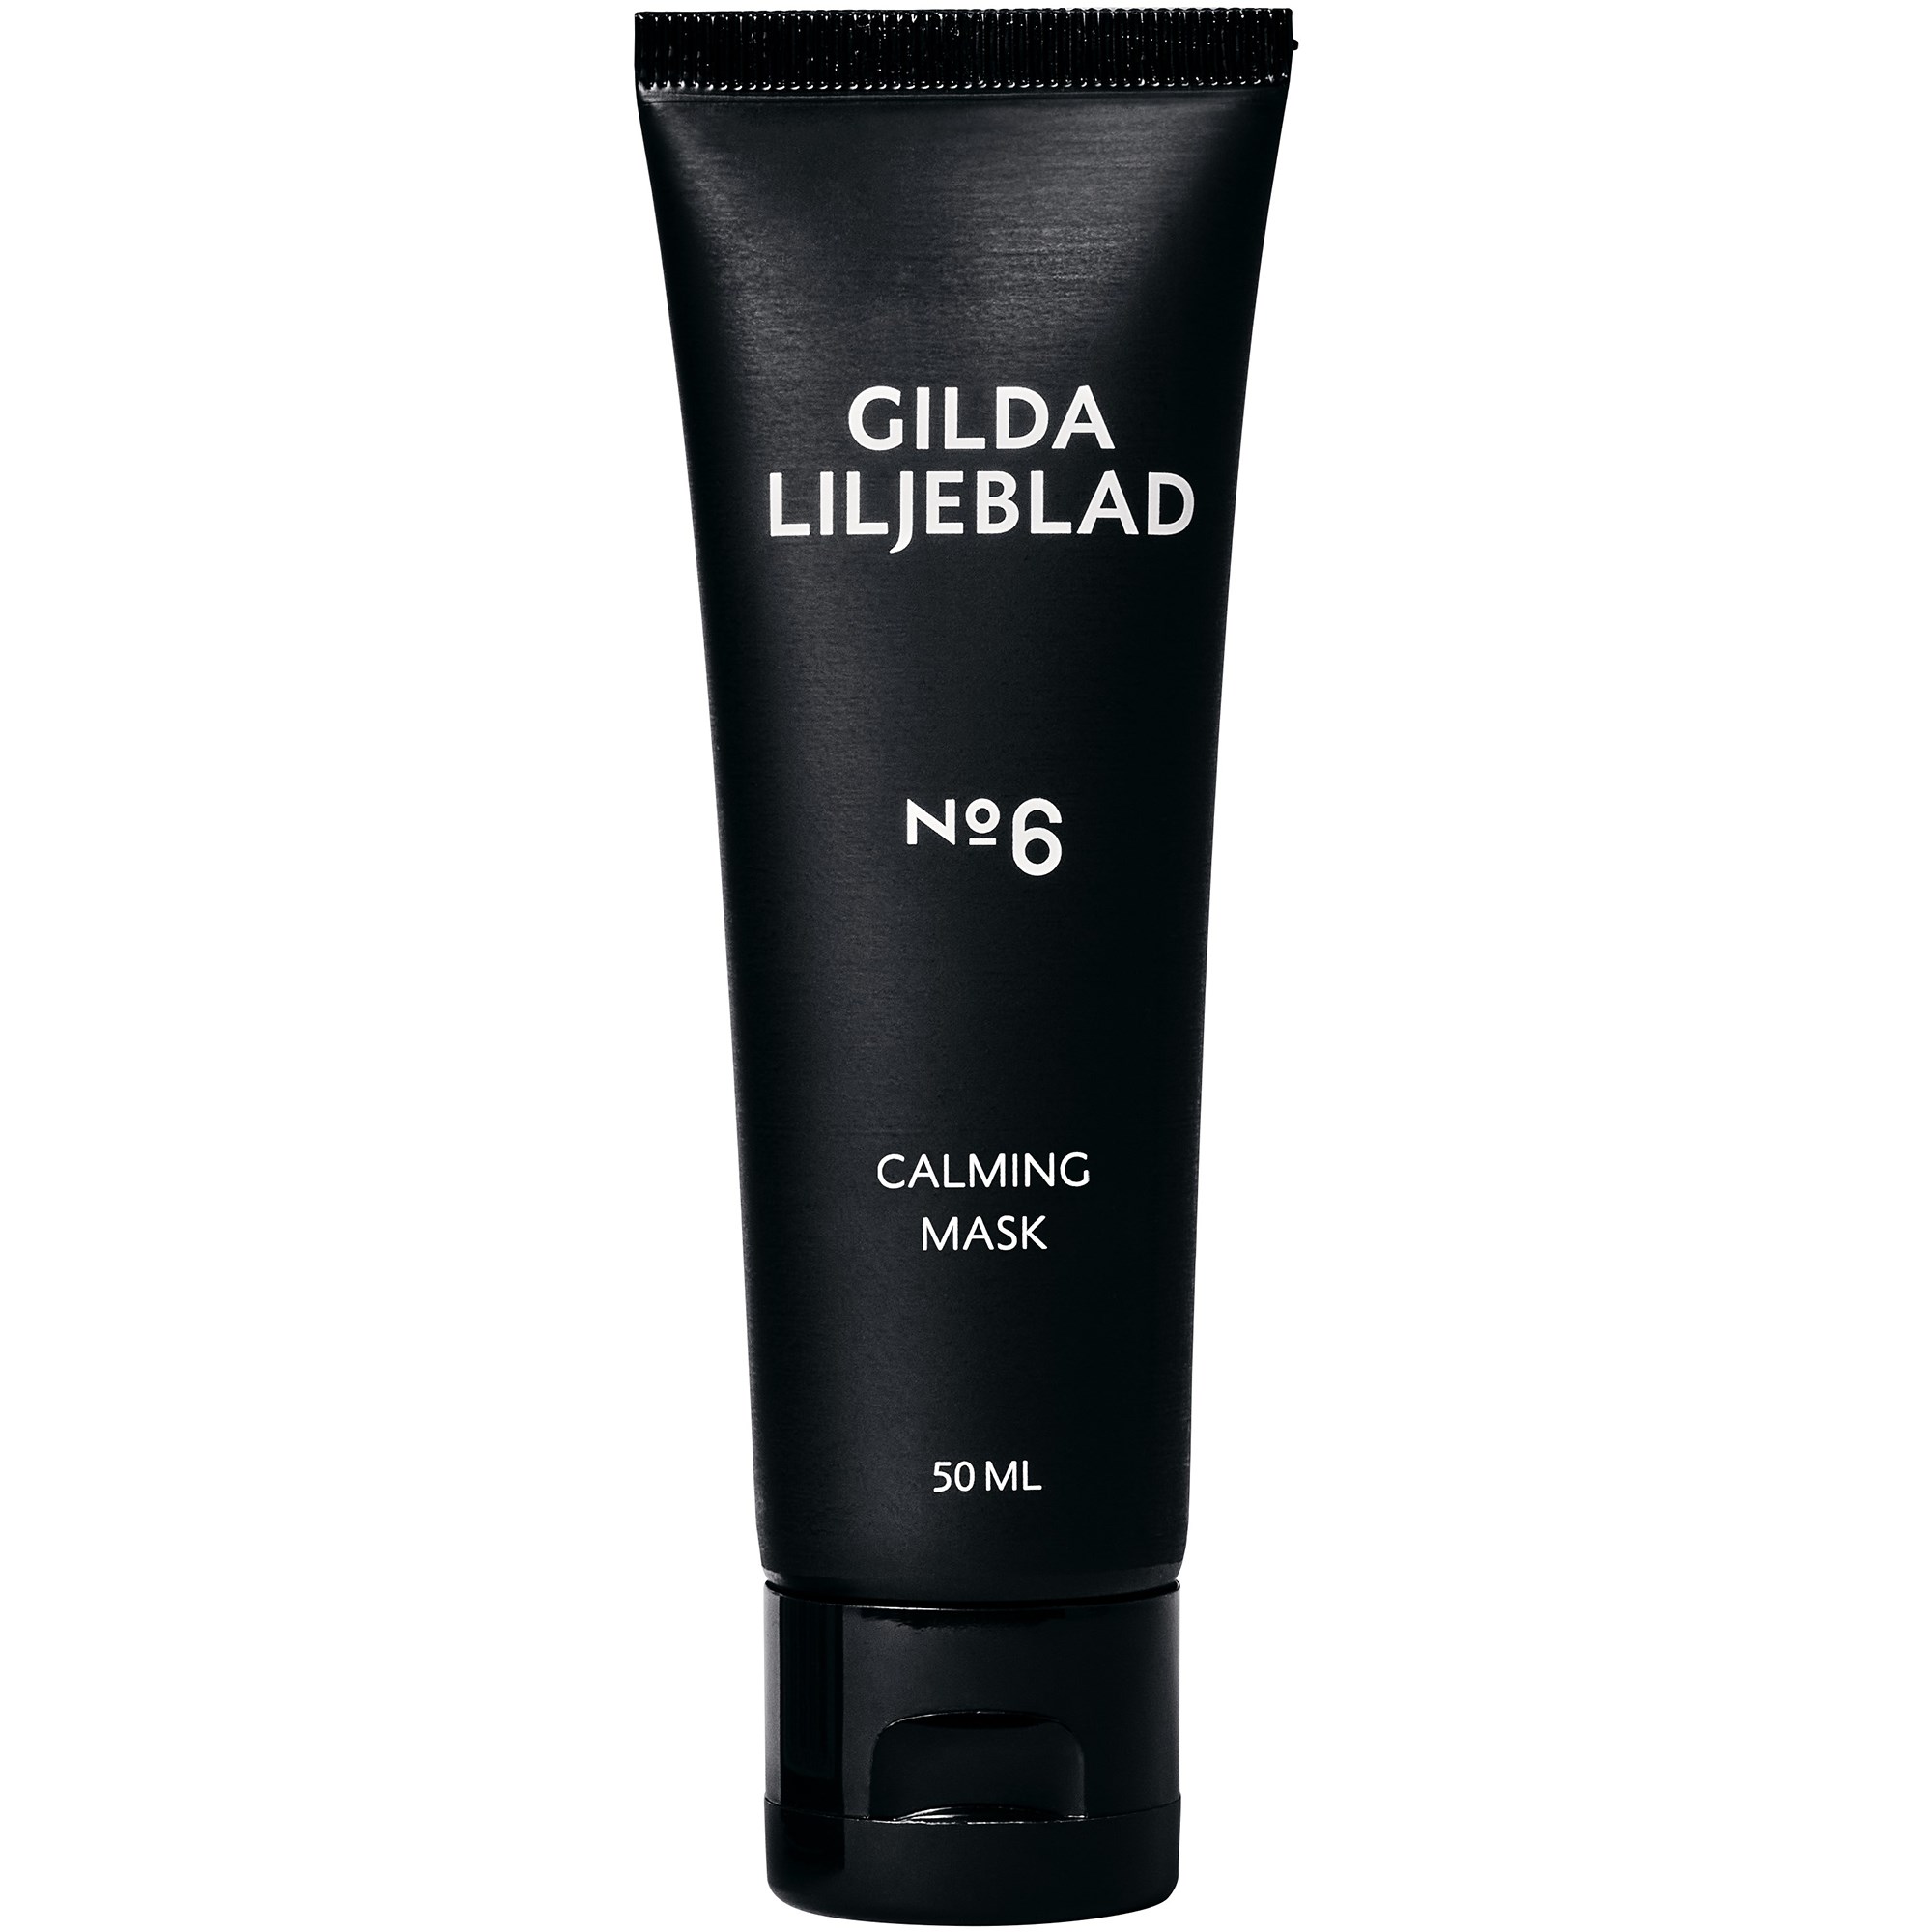 Gilda Liljeblad Calming Mask 50 ml